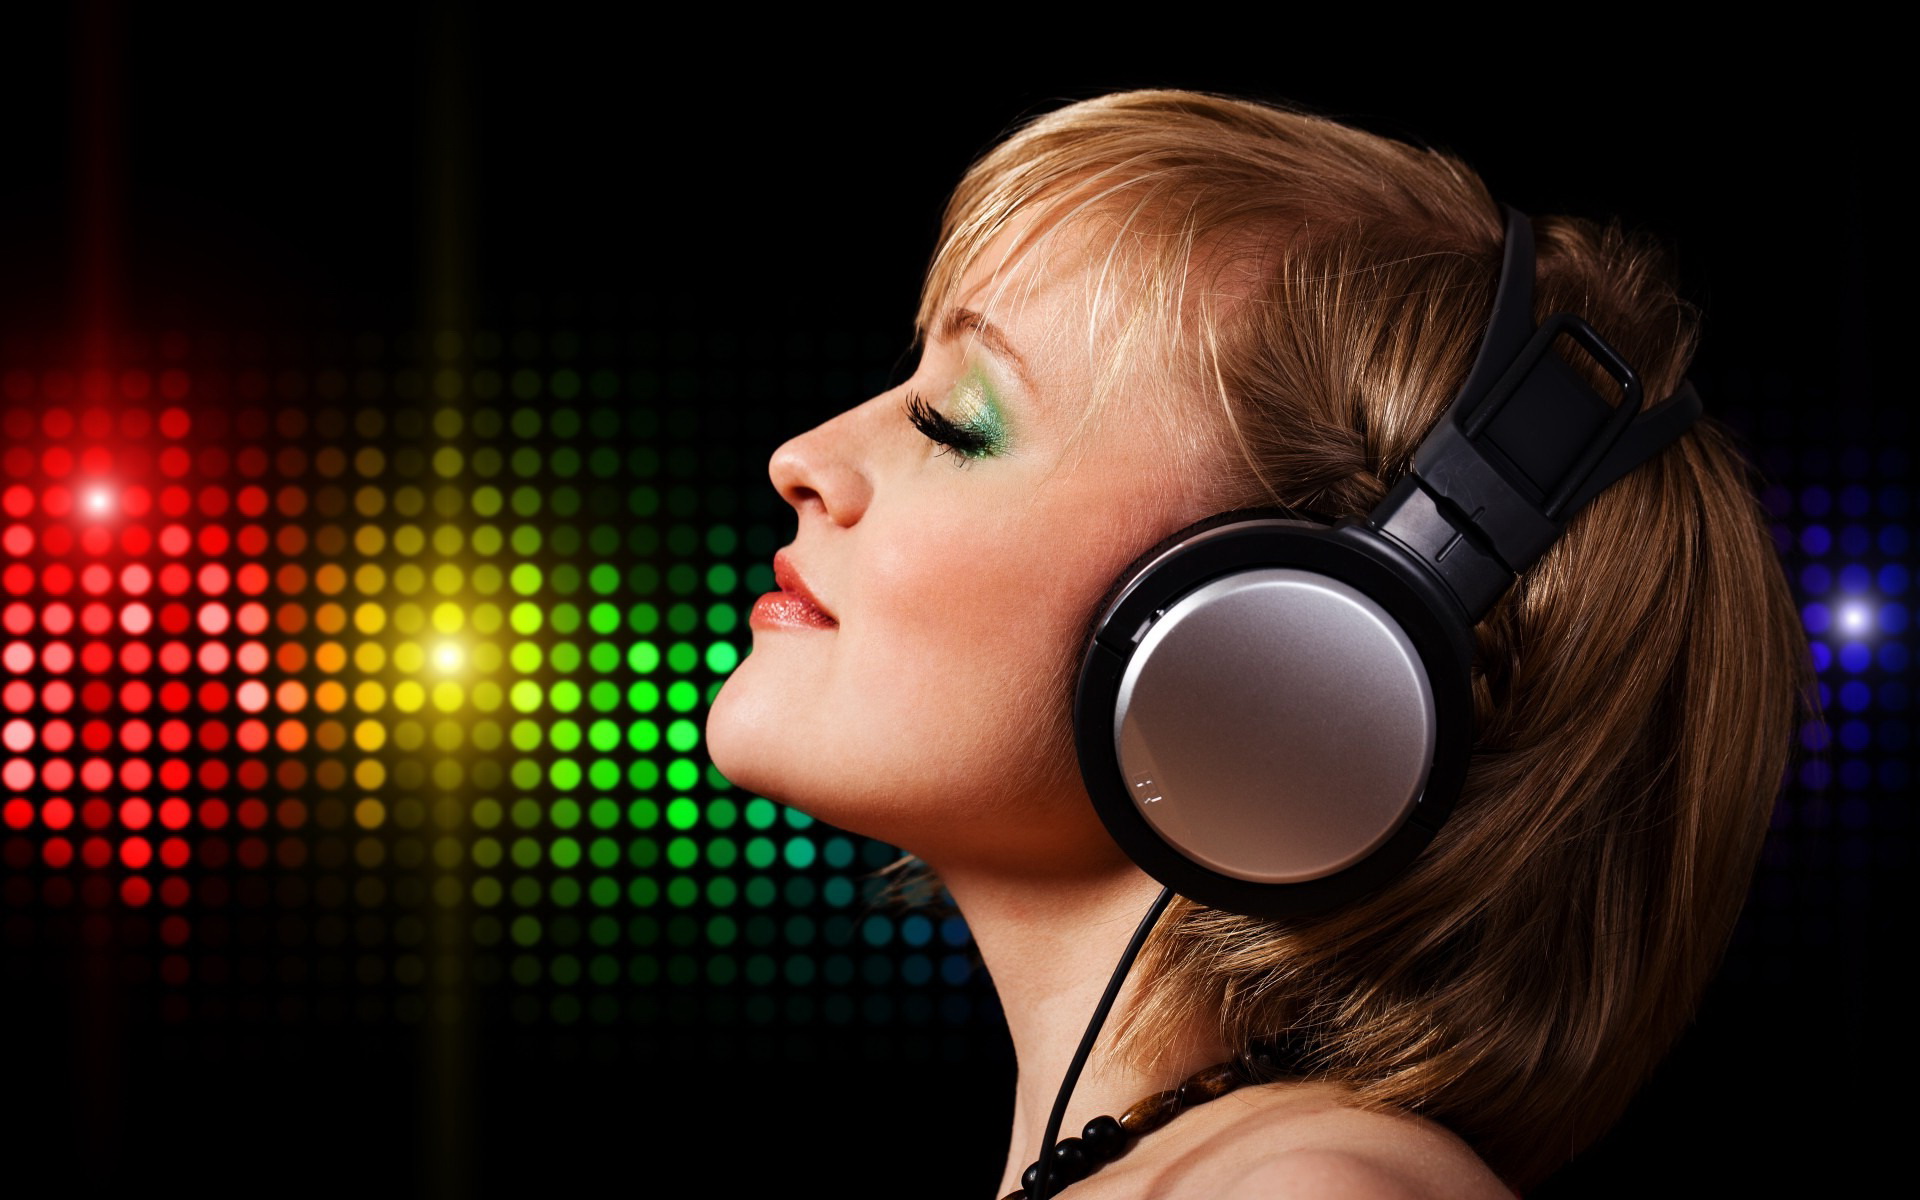 music girl wallpaper,headphones,audio equipment,ear,gadget,hearing